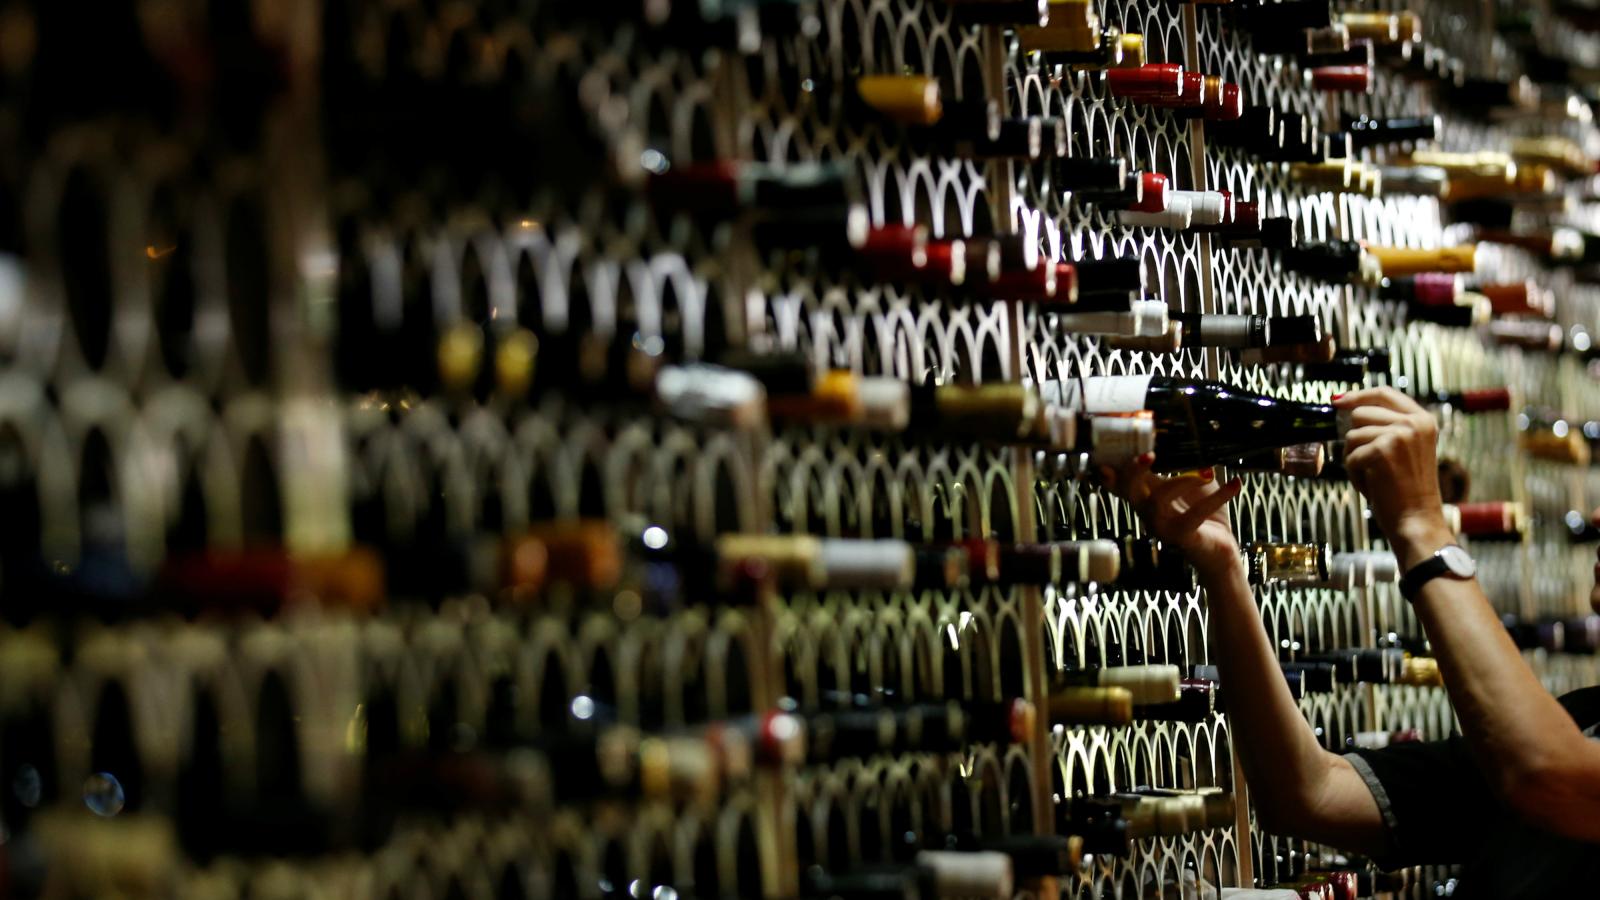 11 Key Tips to Long-Lasting Wine Storage